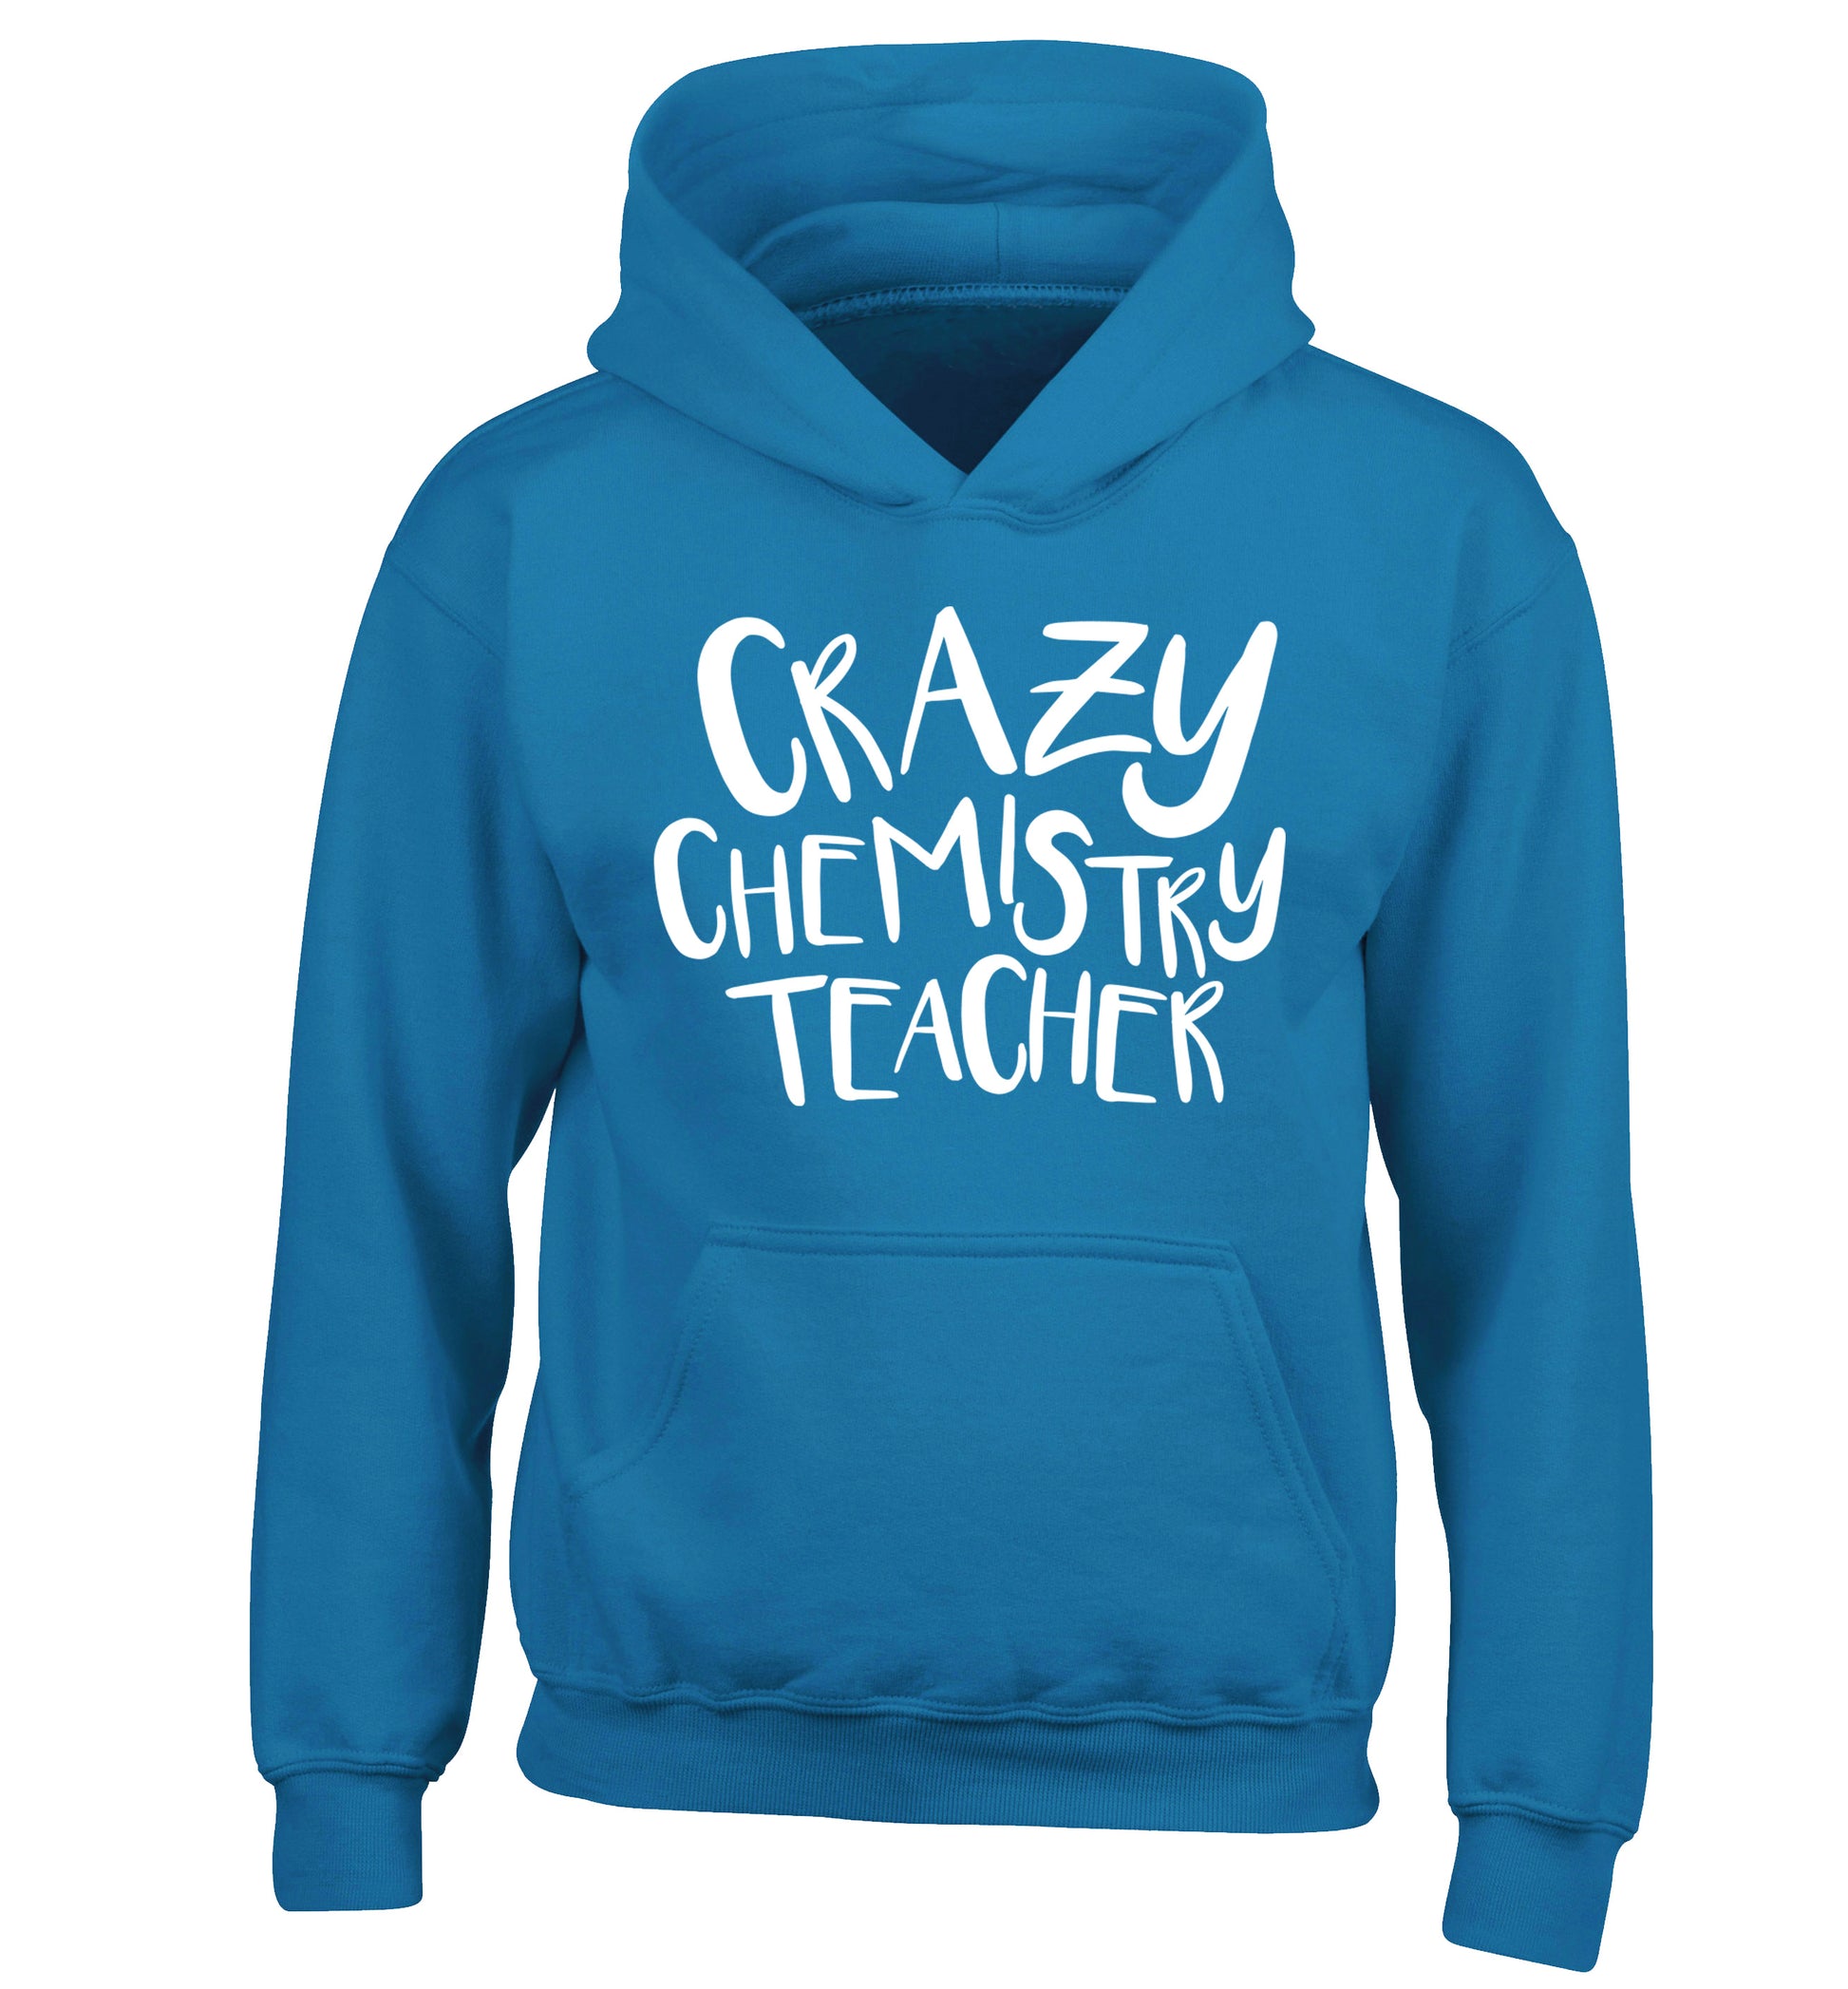 Crazy chemistry teacher children's blue hoodie 12-13 Years